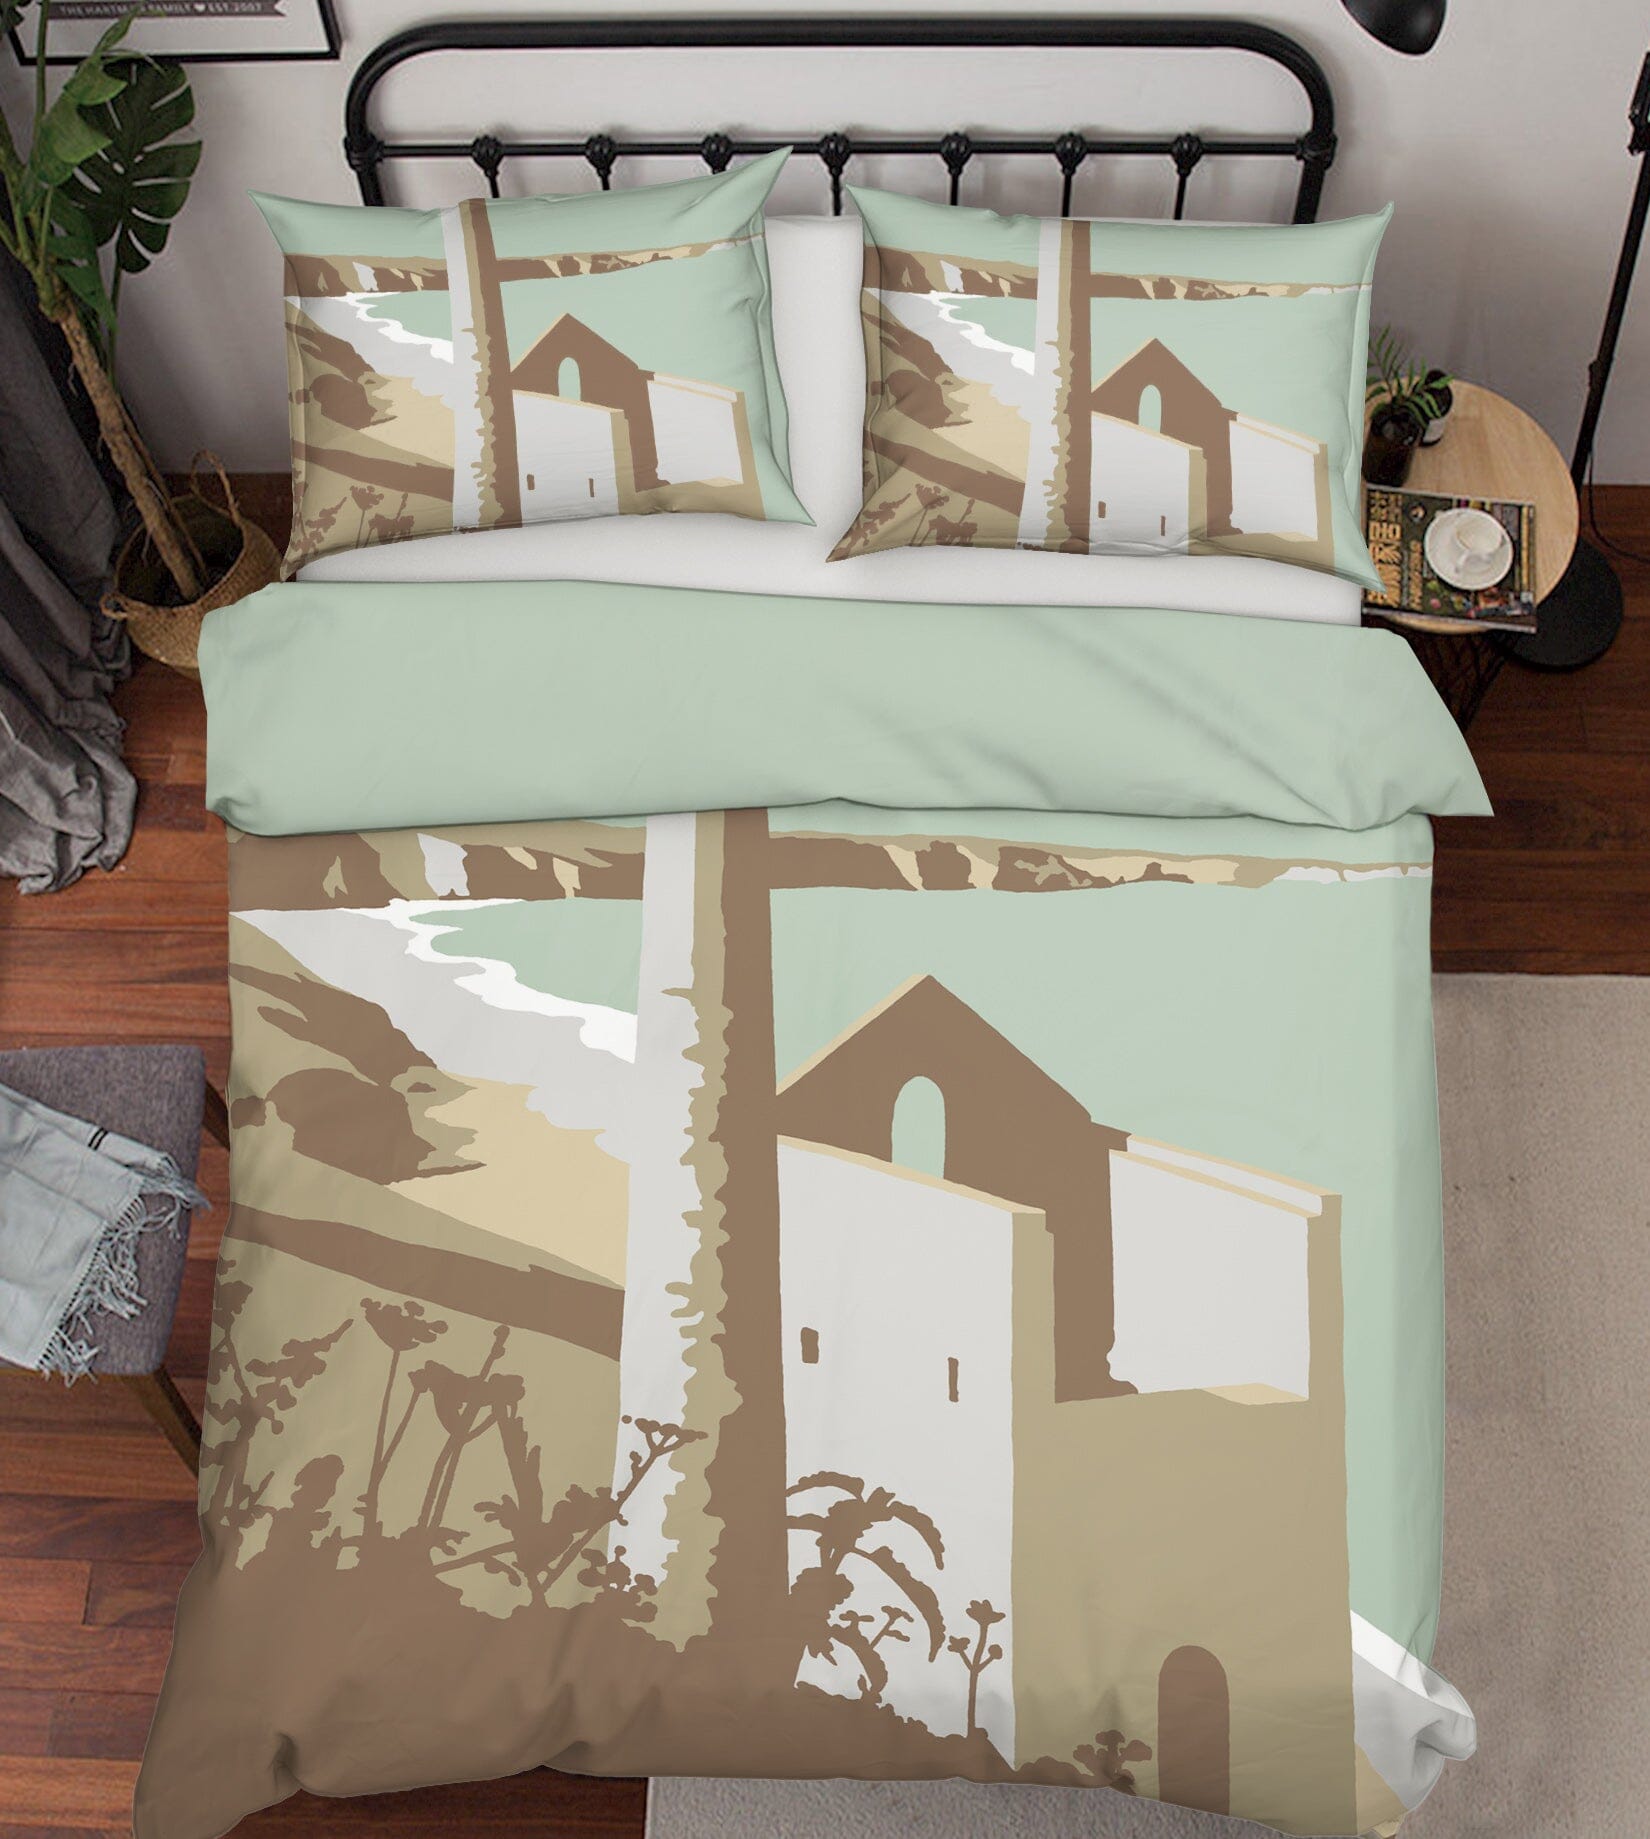 3D St Agnes 2064 Steve Read Bedding Bed Pillowcases Quilt Quiet Covers AJ Creativity Home 